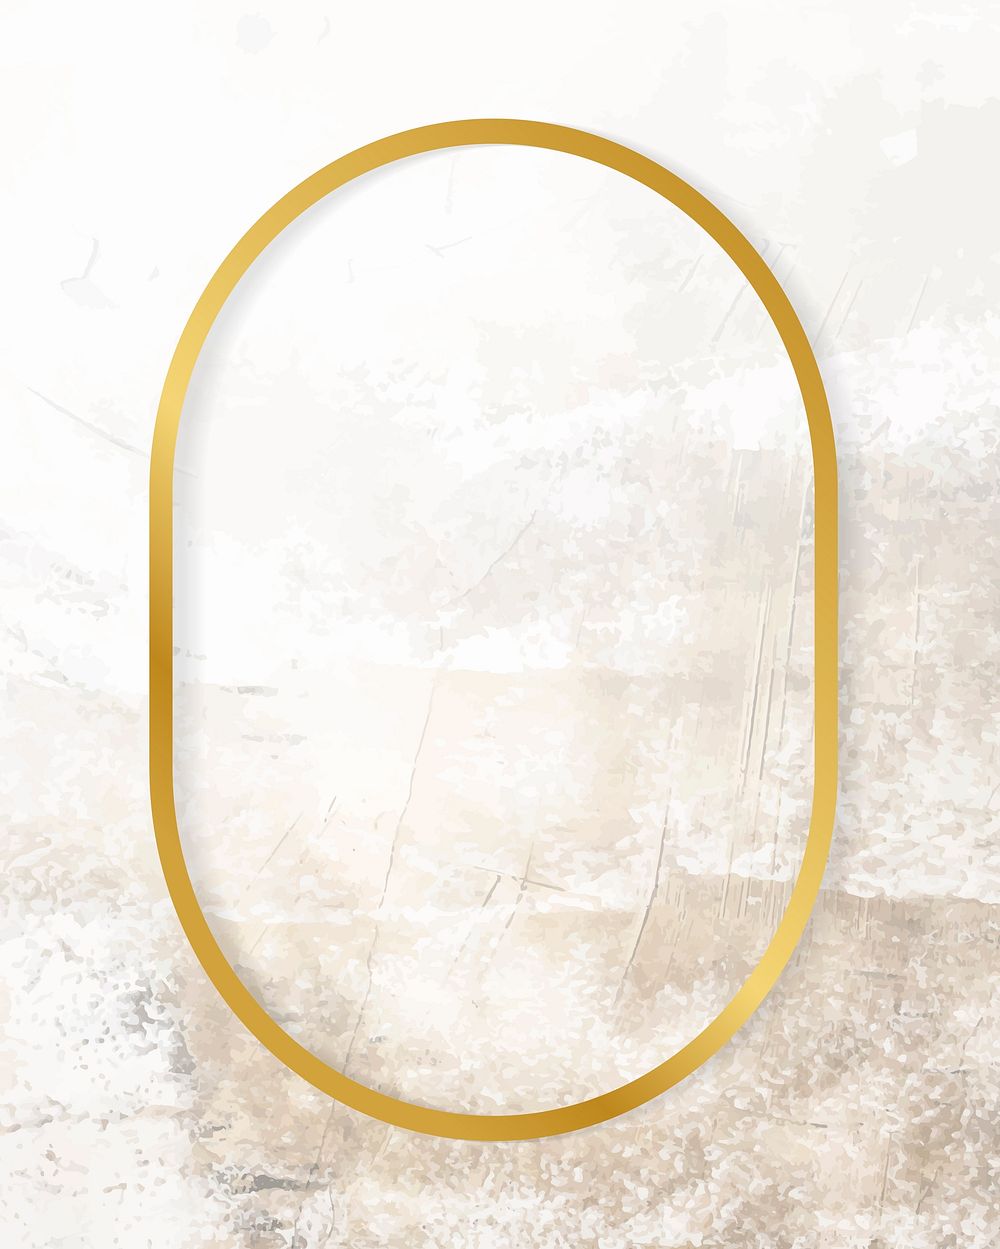 Golden framed oval on a grunge textured vector